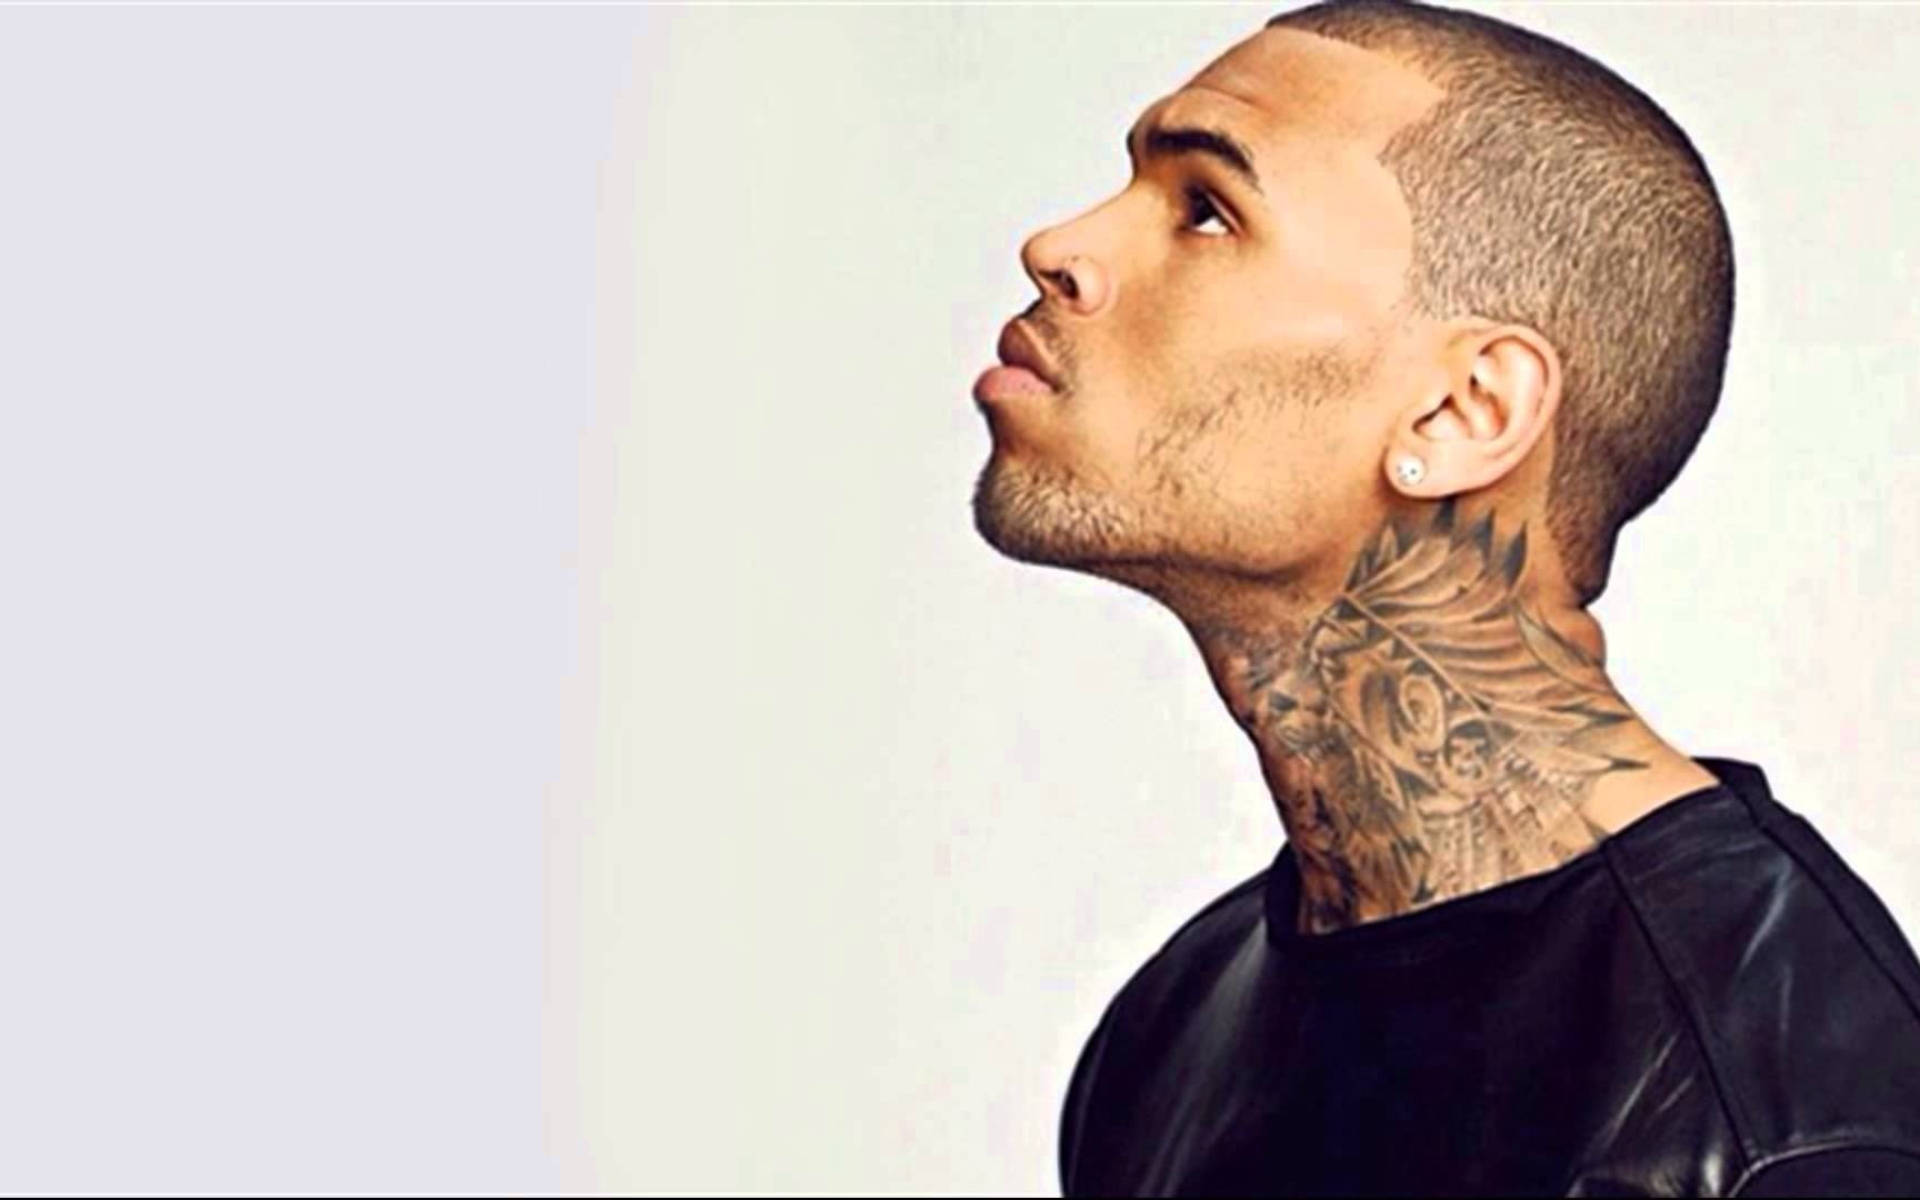 Chris Brown Side Profile Wallpaper